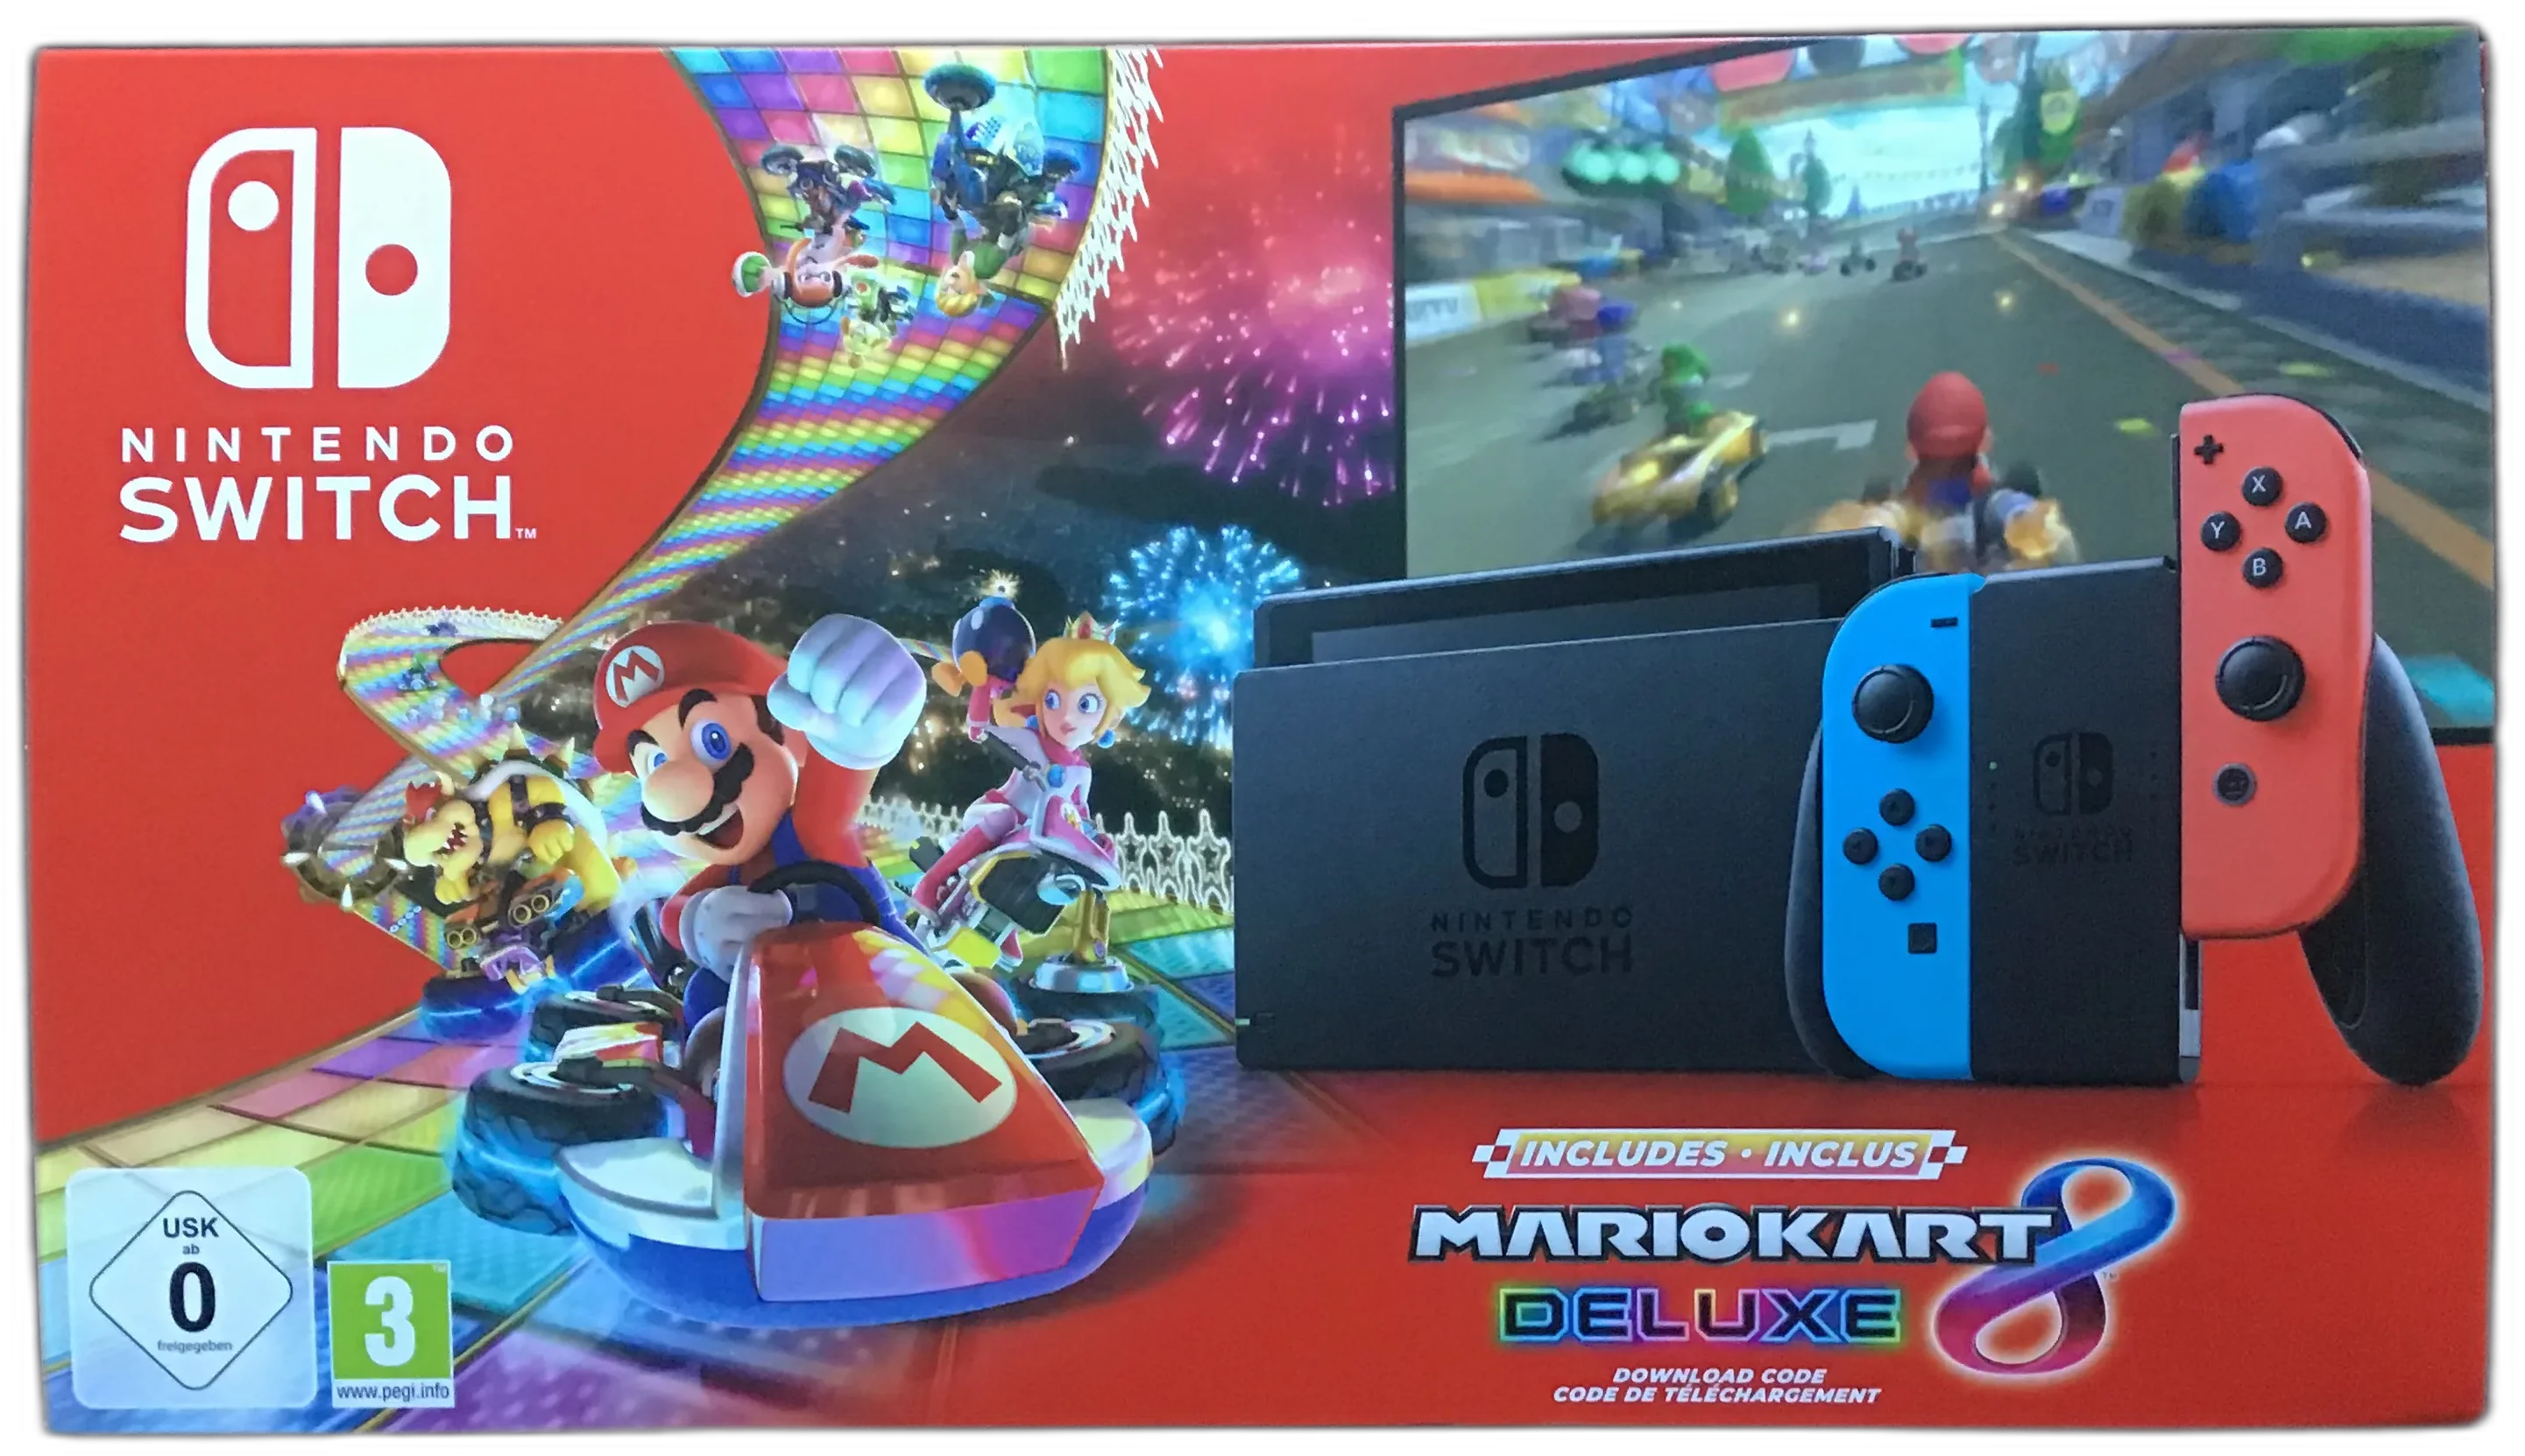  Nintendo Switch Black Friday Mario Kart Deluxe 8 Bundle [FR]